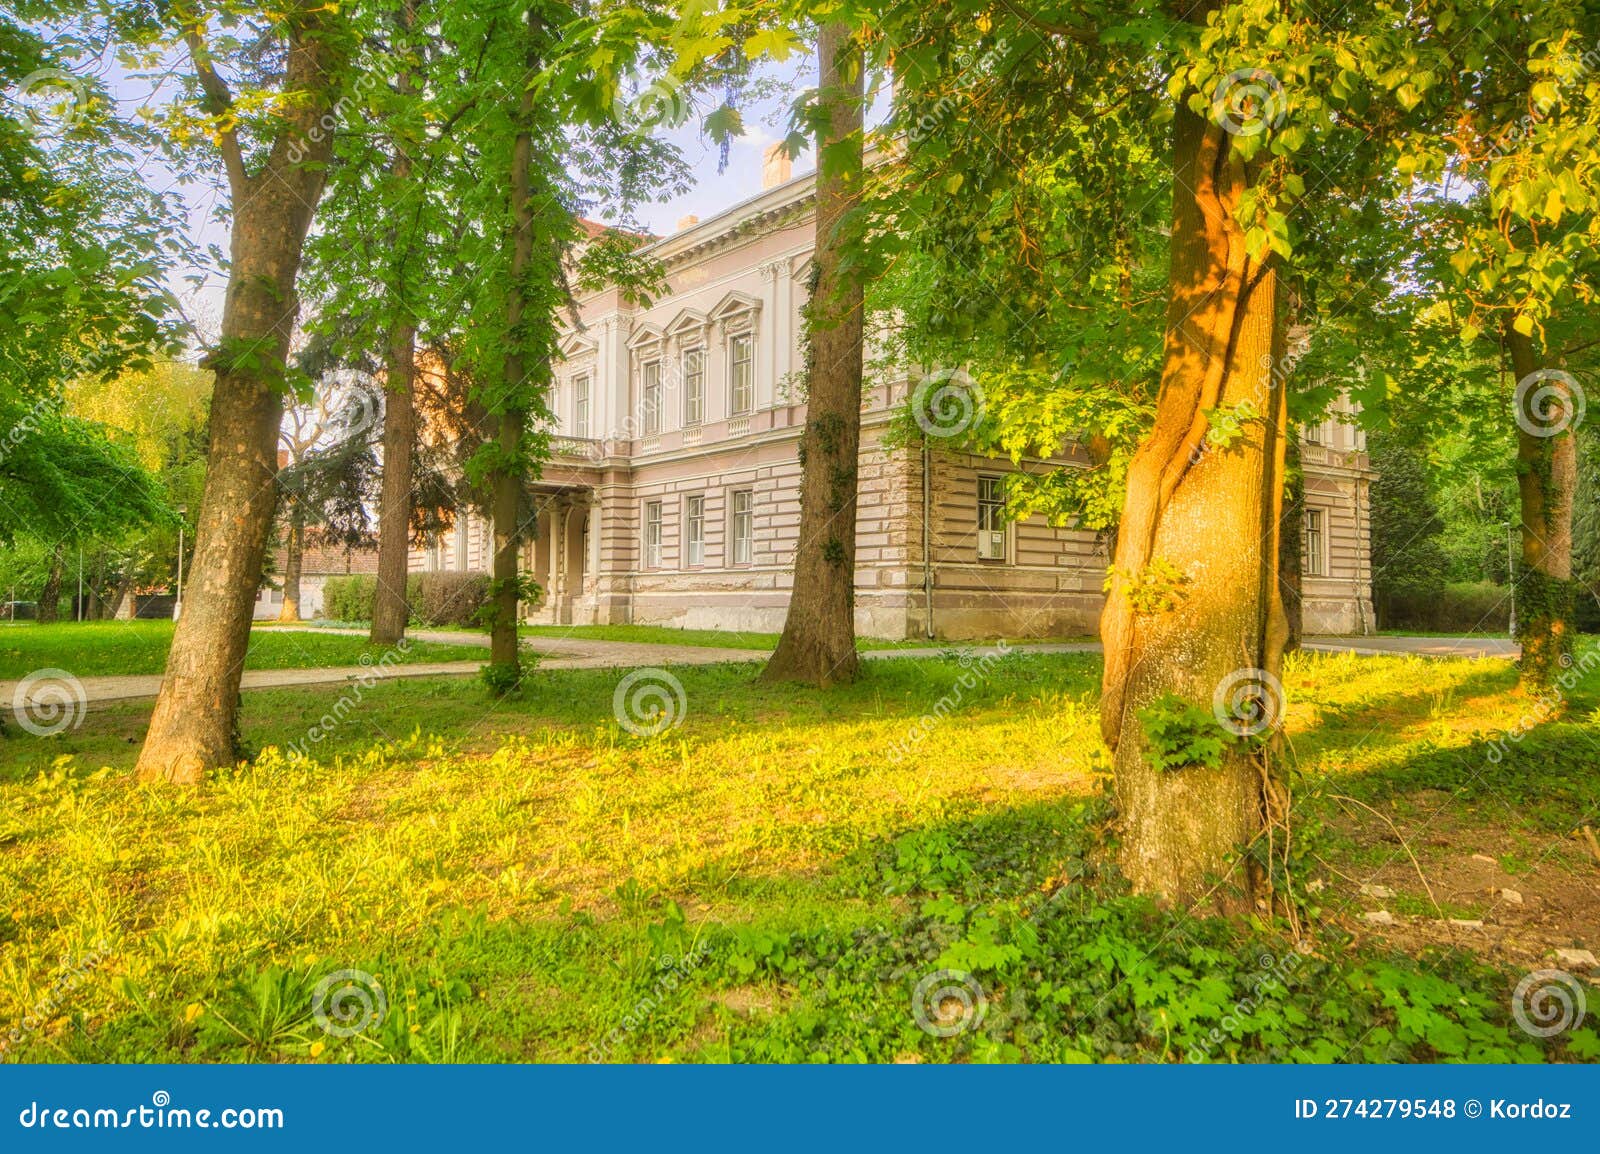 trees in the park in nova ves nad zitavou village near neo classicist manor house